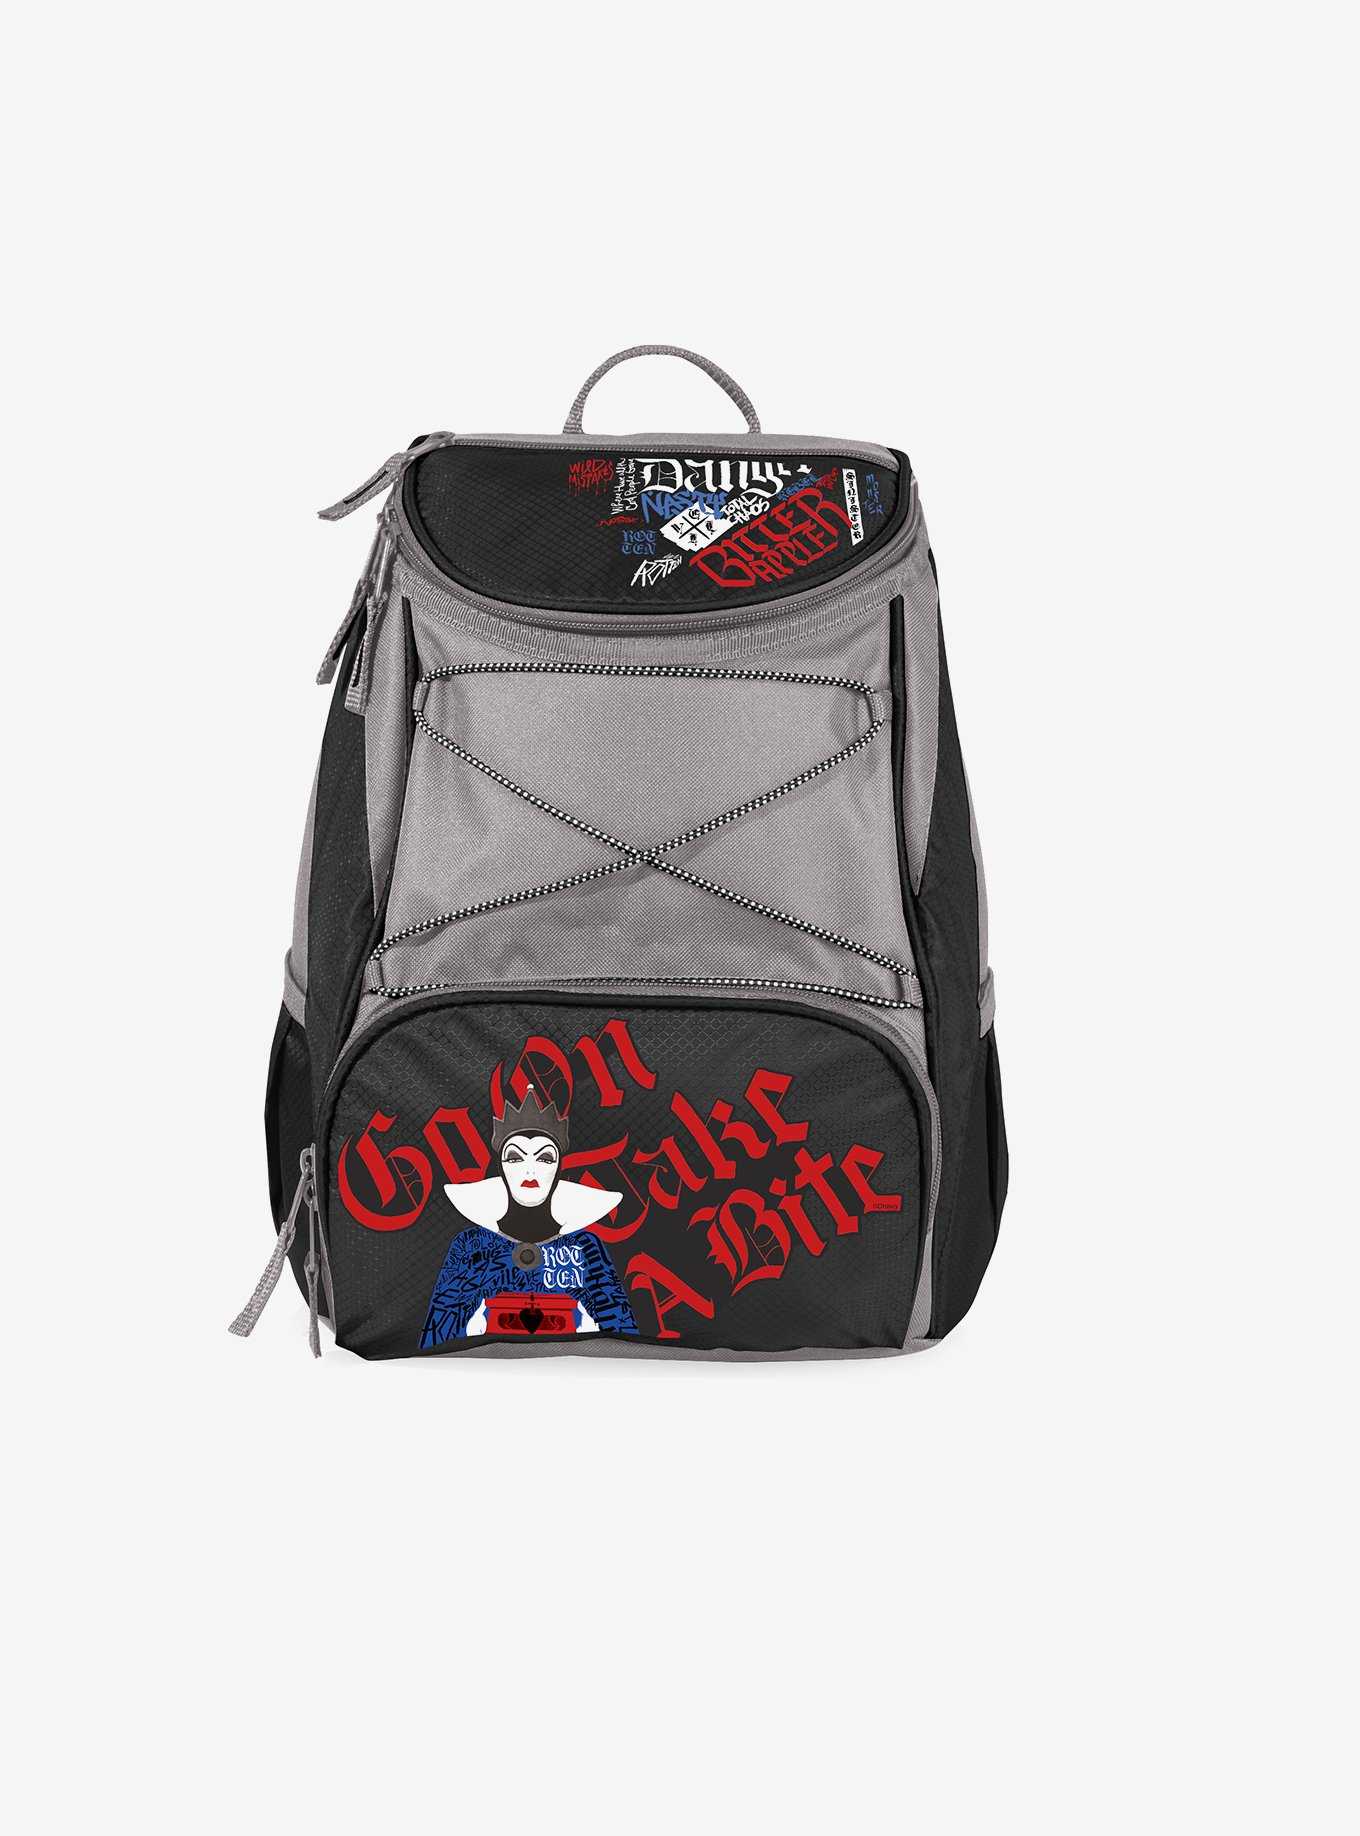 Disney Evil Queen Cooler Backpack, , hi-res